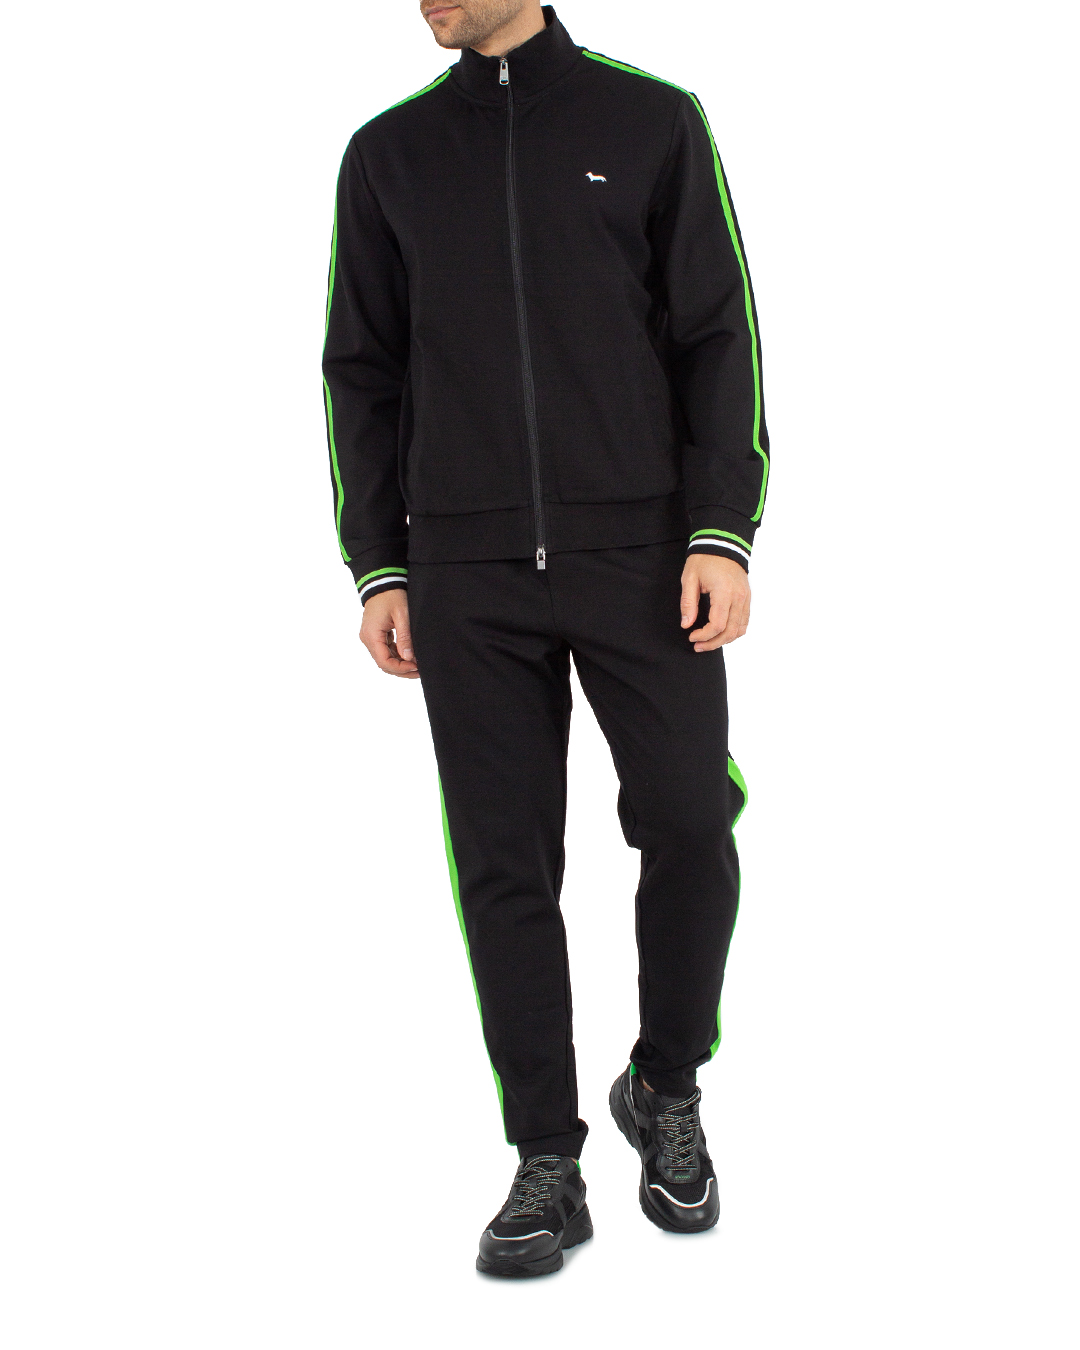 брюки Harmont & Blaine FRK155 черный+зеленый xl, размер xl, цвет черный+зеленый FRK155 черный+зеленый xl - фото 2